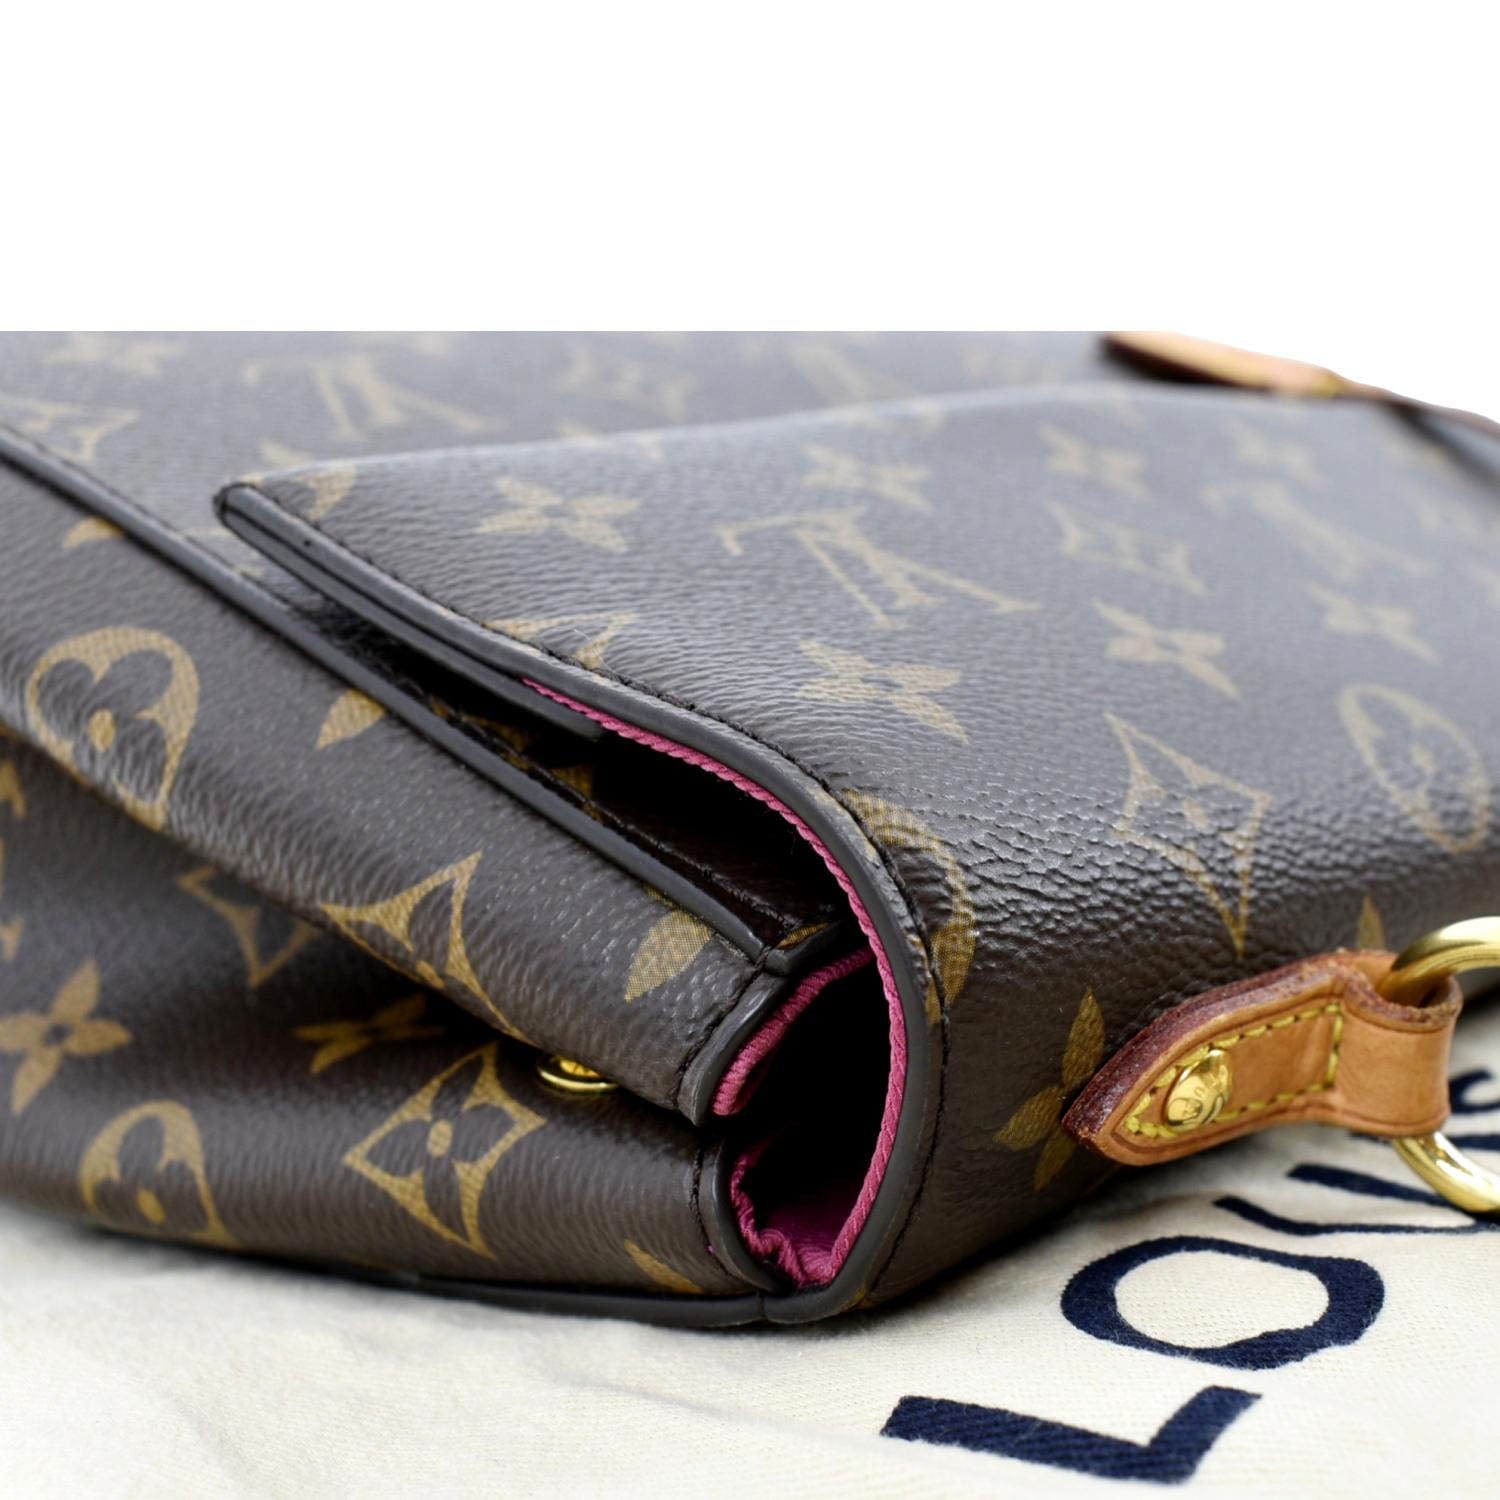 Louis Vuitton Monogram Cluny MM - Brown Handle Bags, Handbags